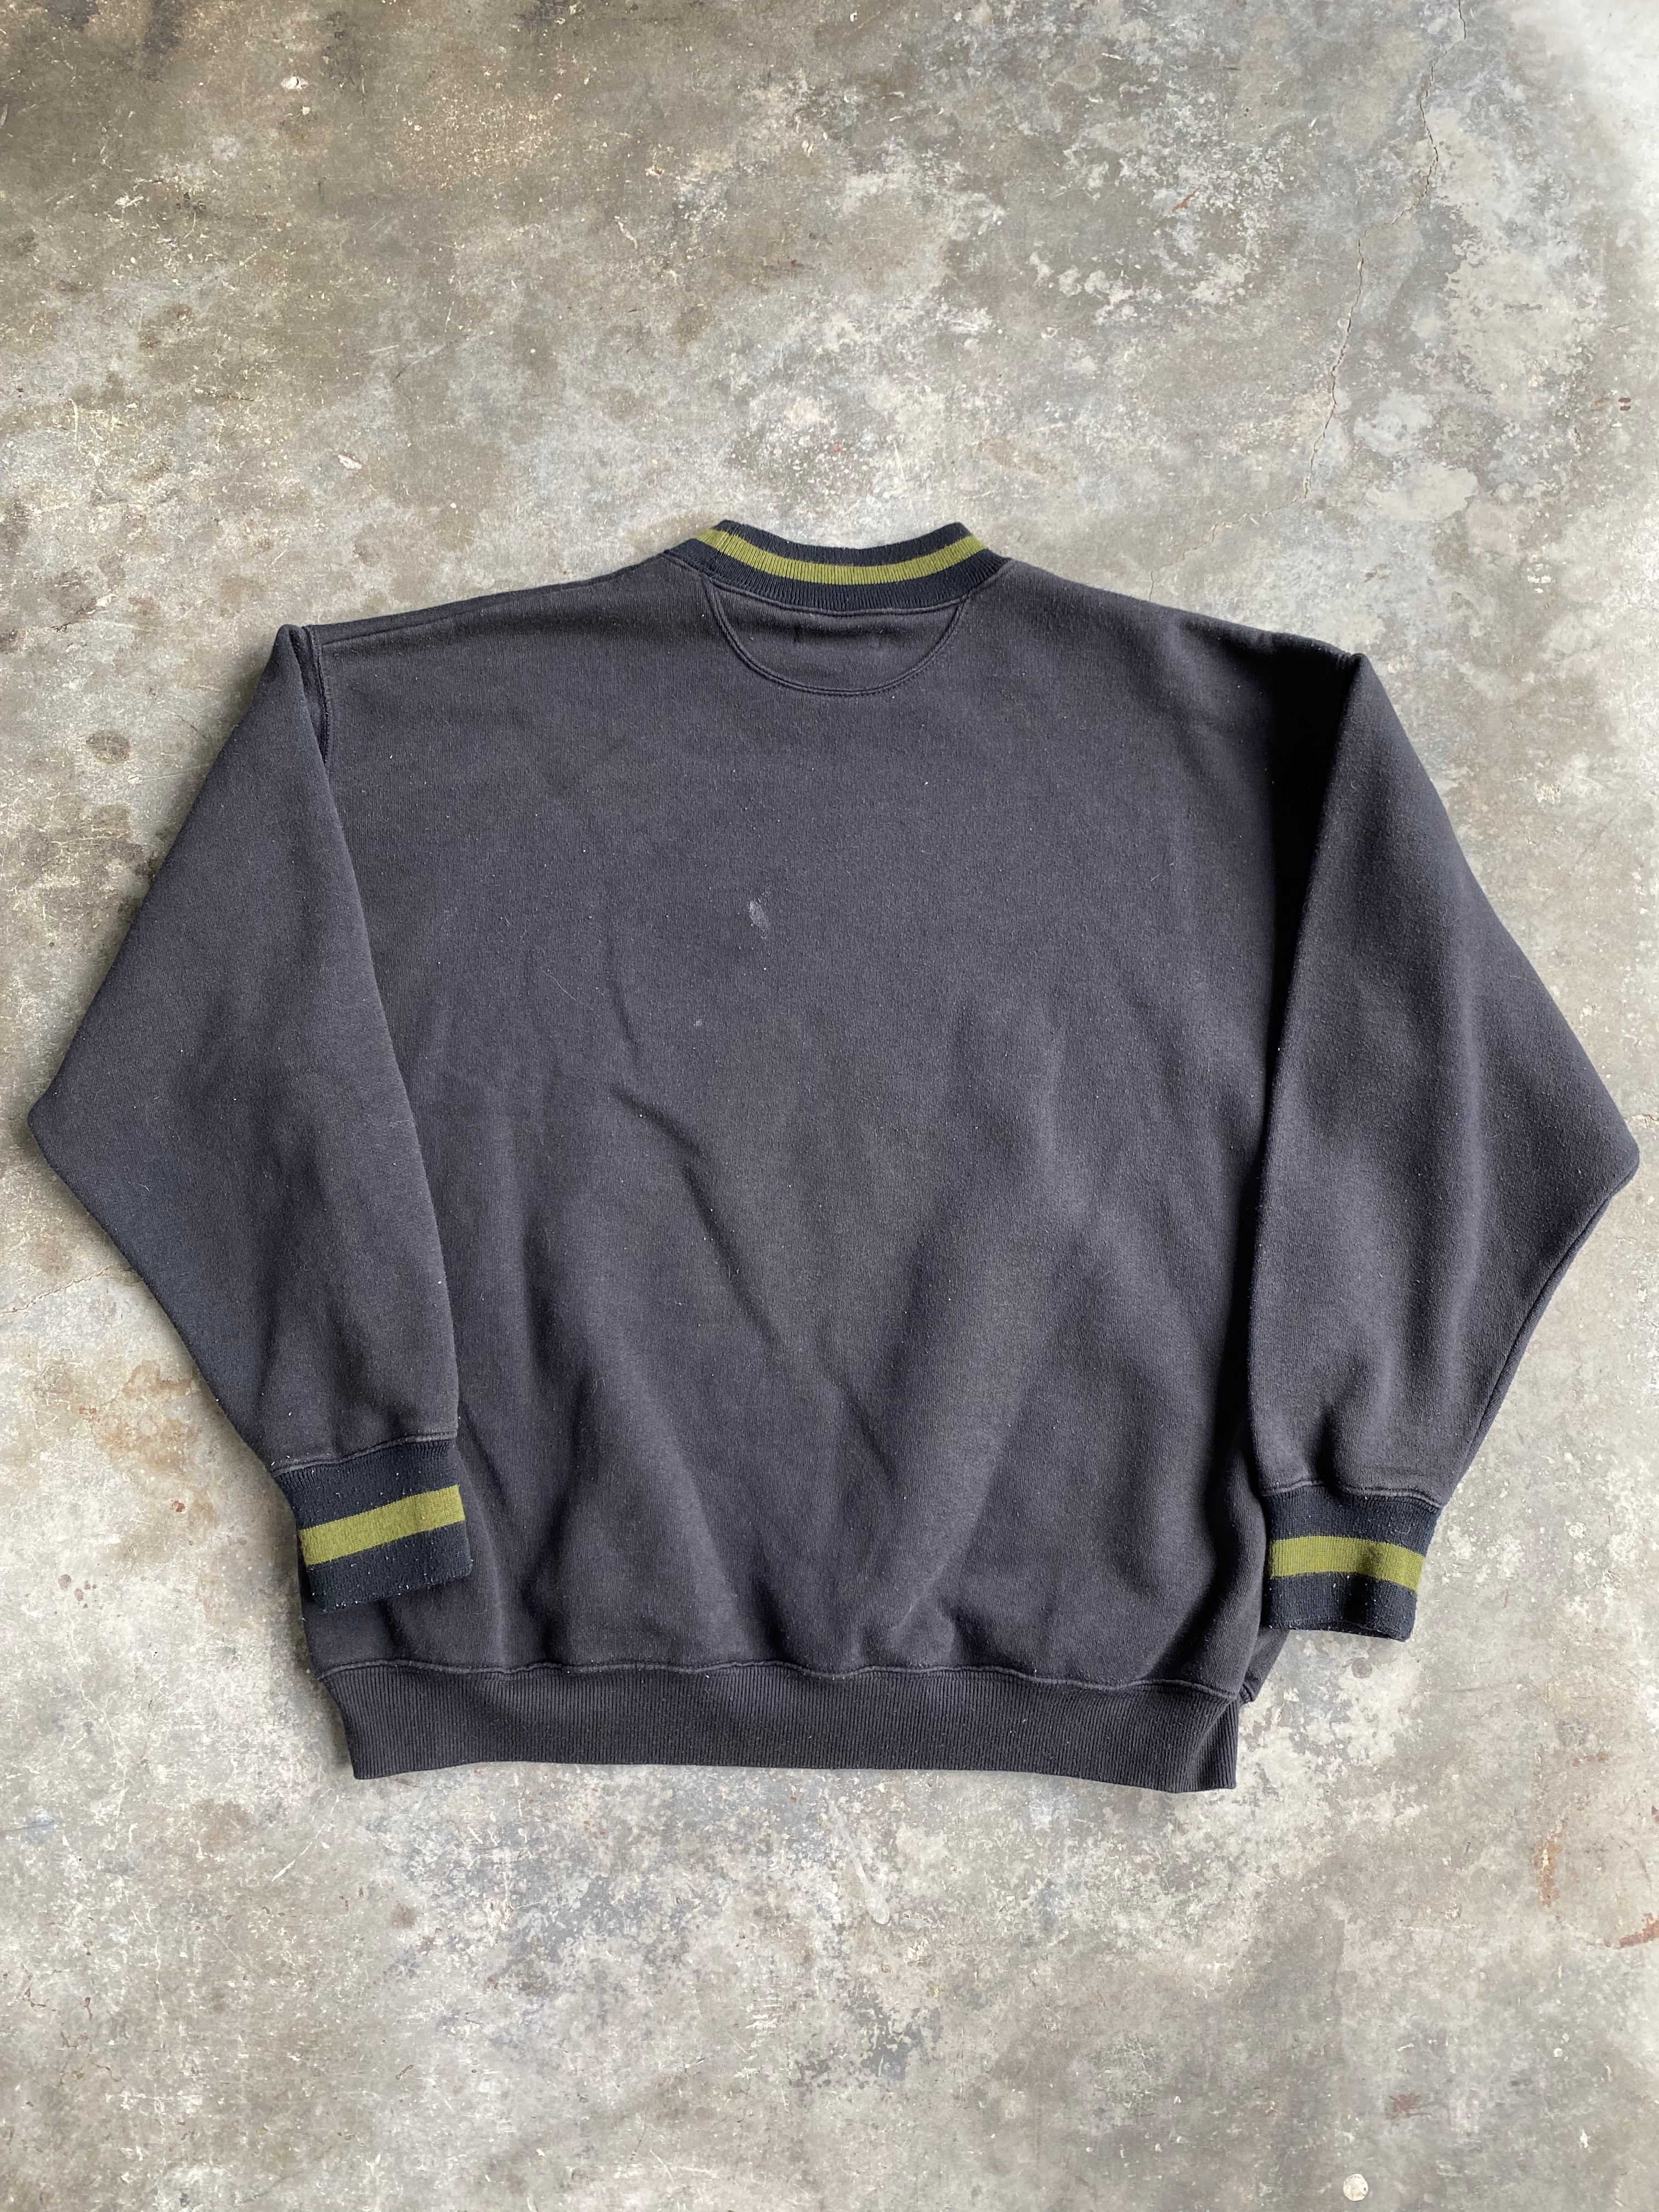 Vintage Bugle Boy Sweatshirt - L